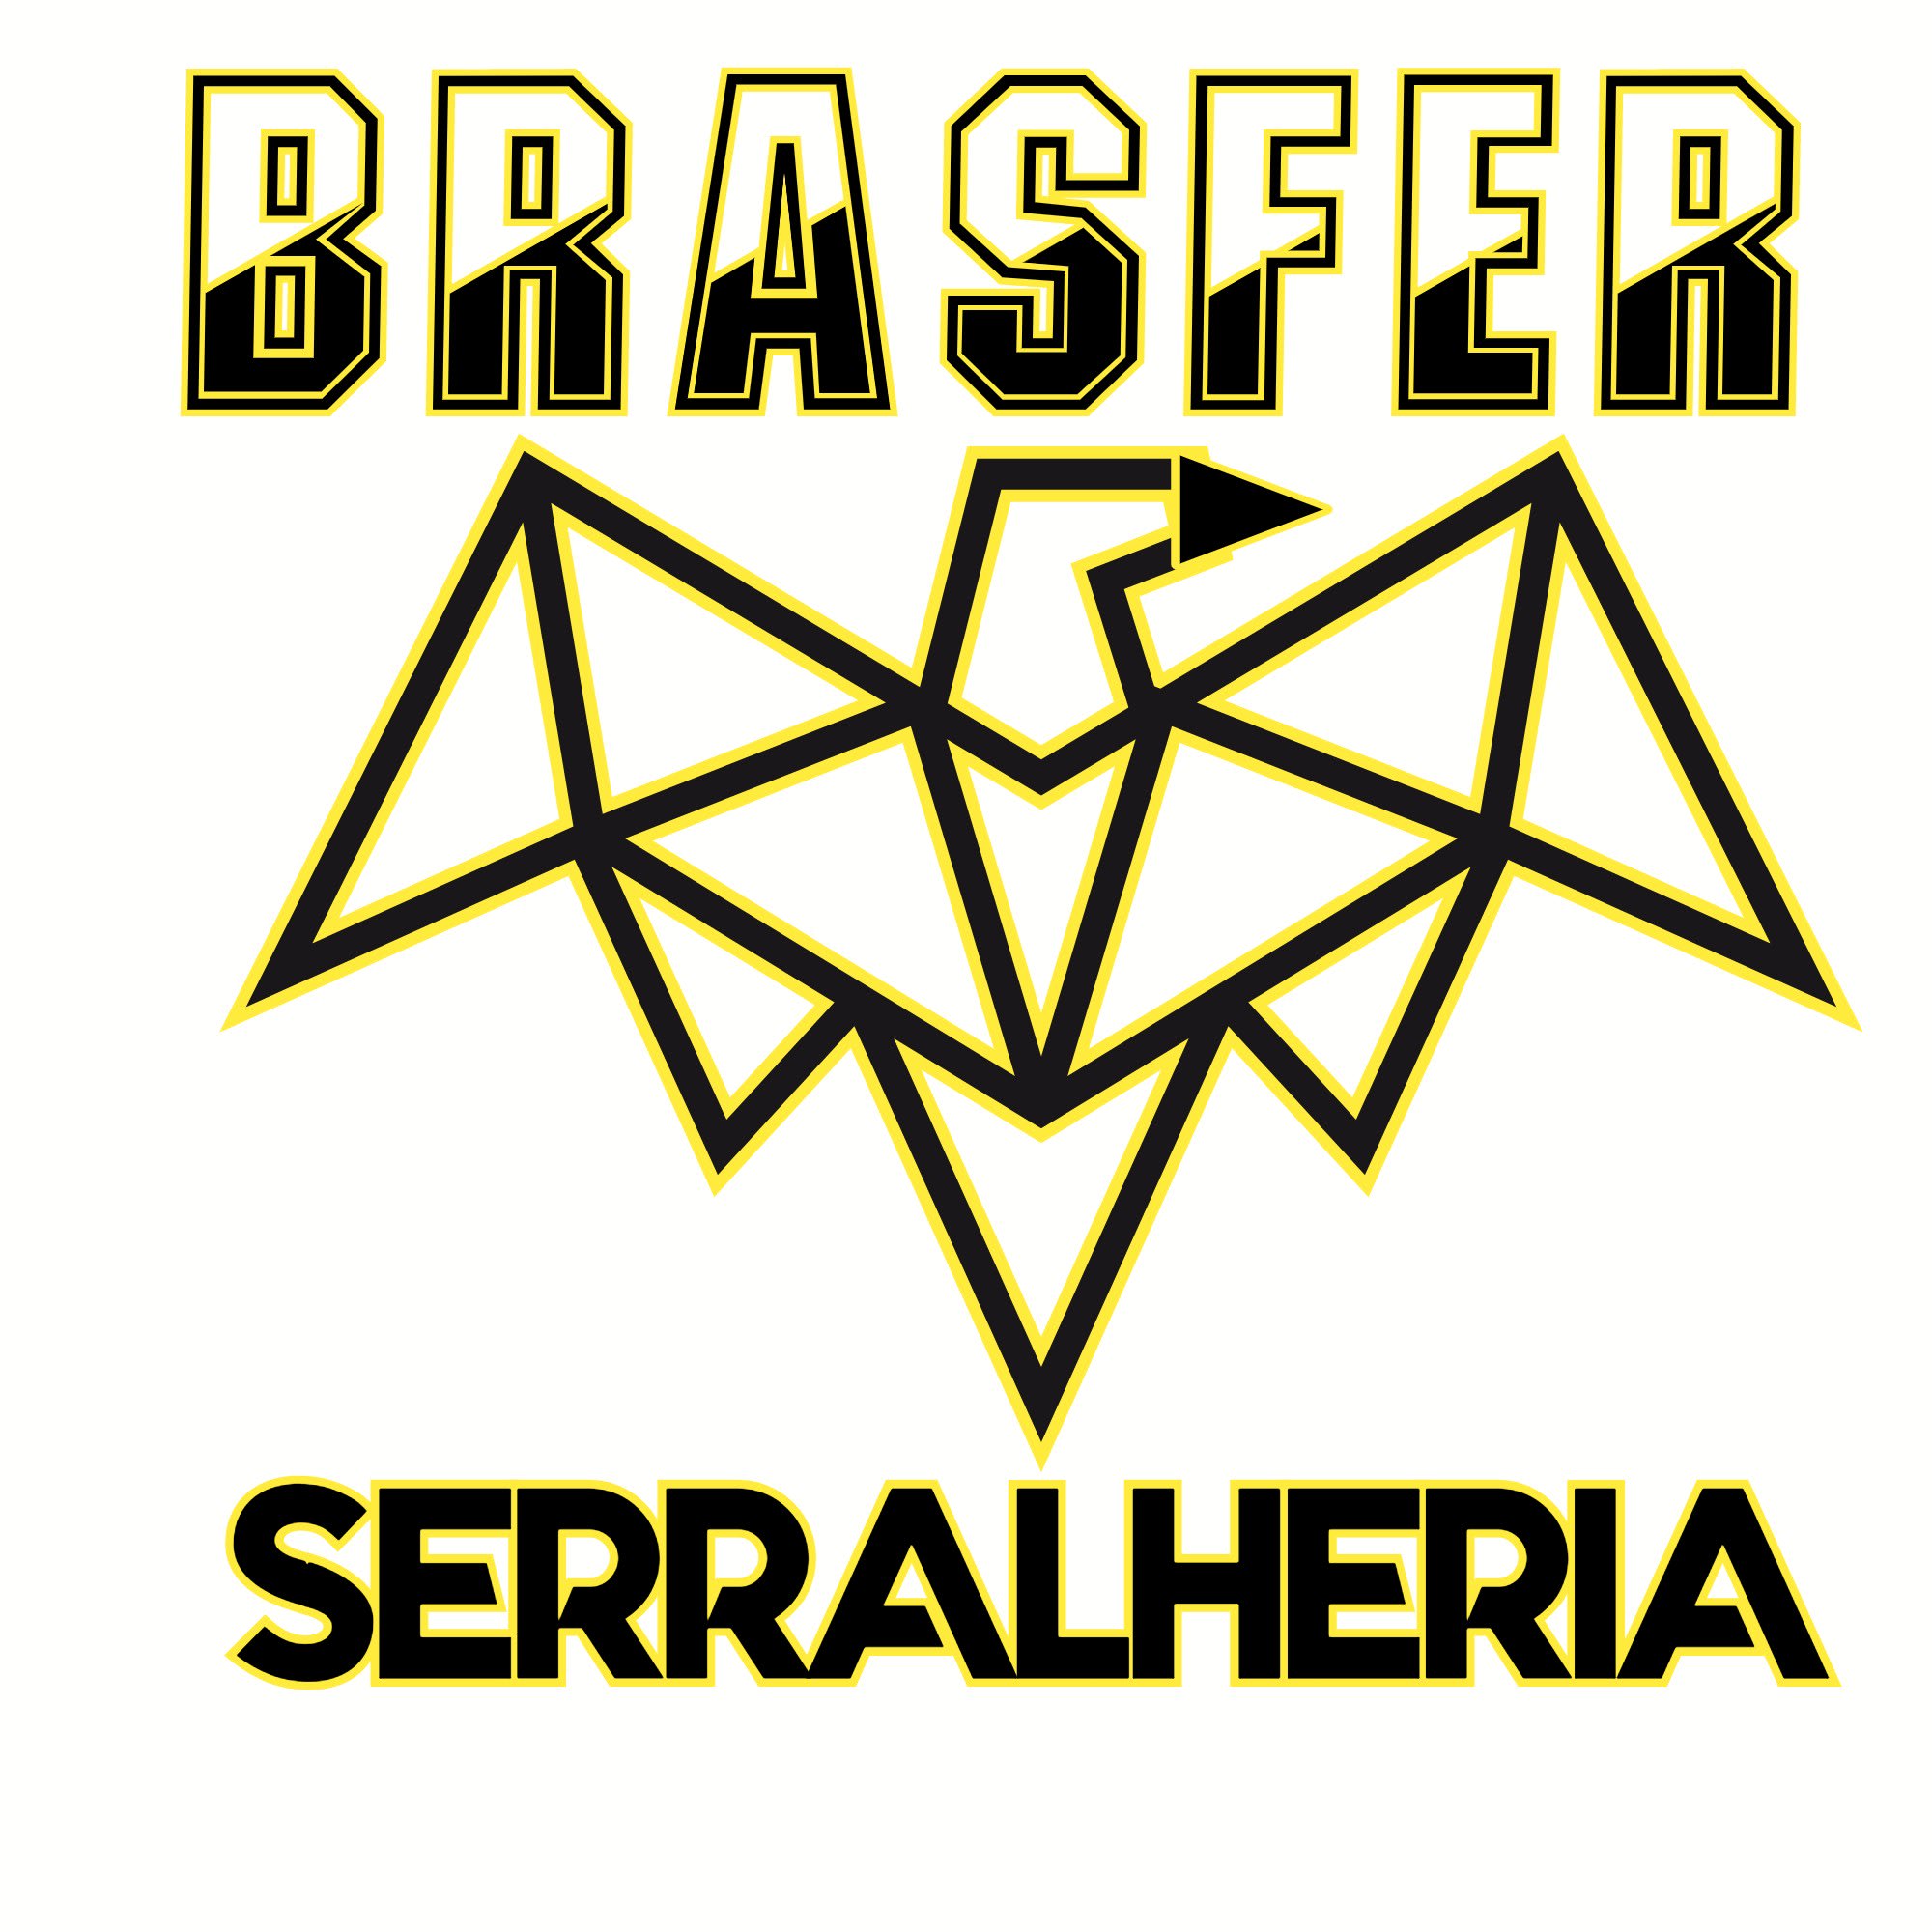 BRASFER SERRALHERIA